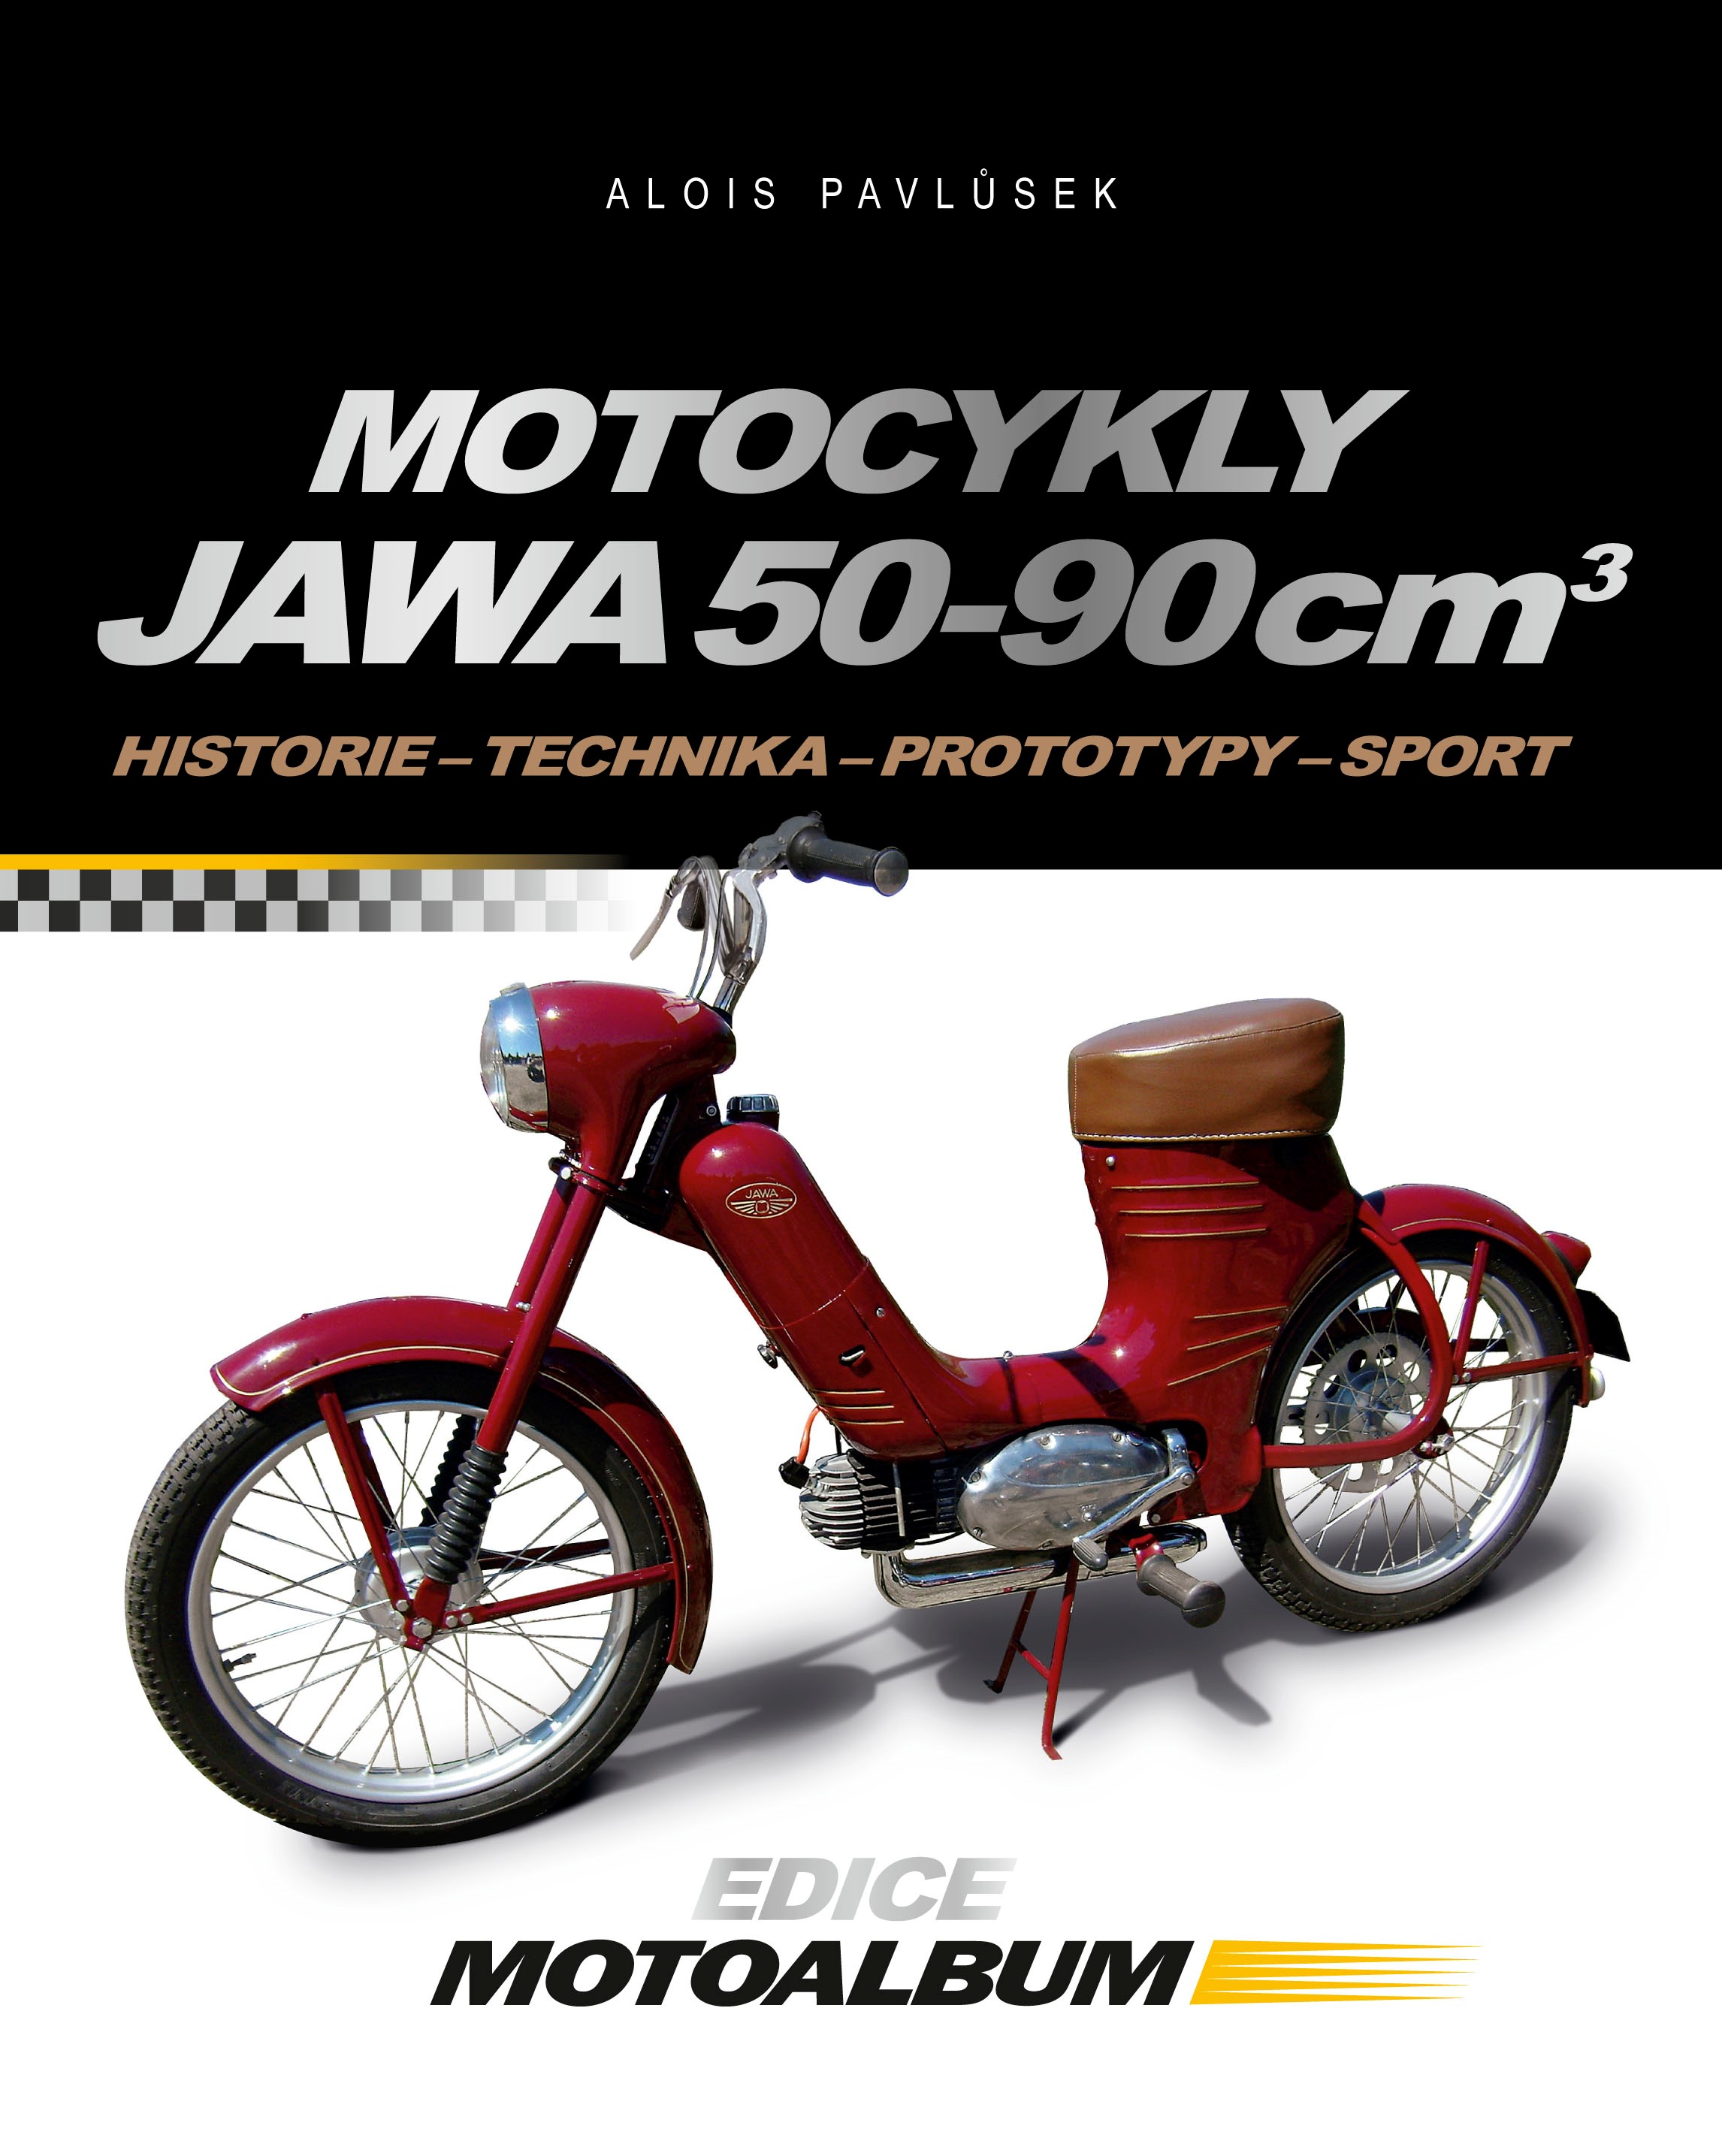 MOTOCYKLY JAWA 50-90 CM3 /HISTORIE-TECHNIKA-PROTOTYPY-SPORT/